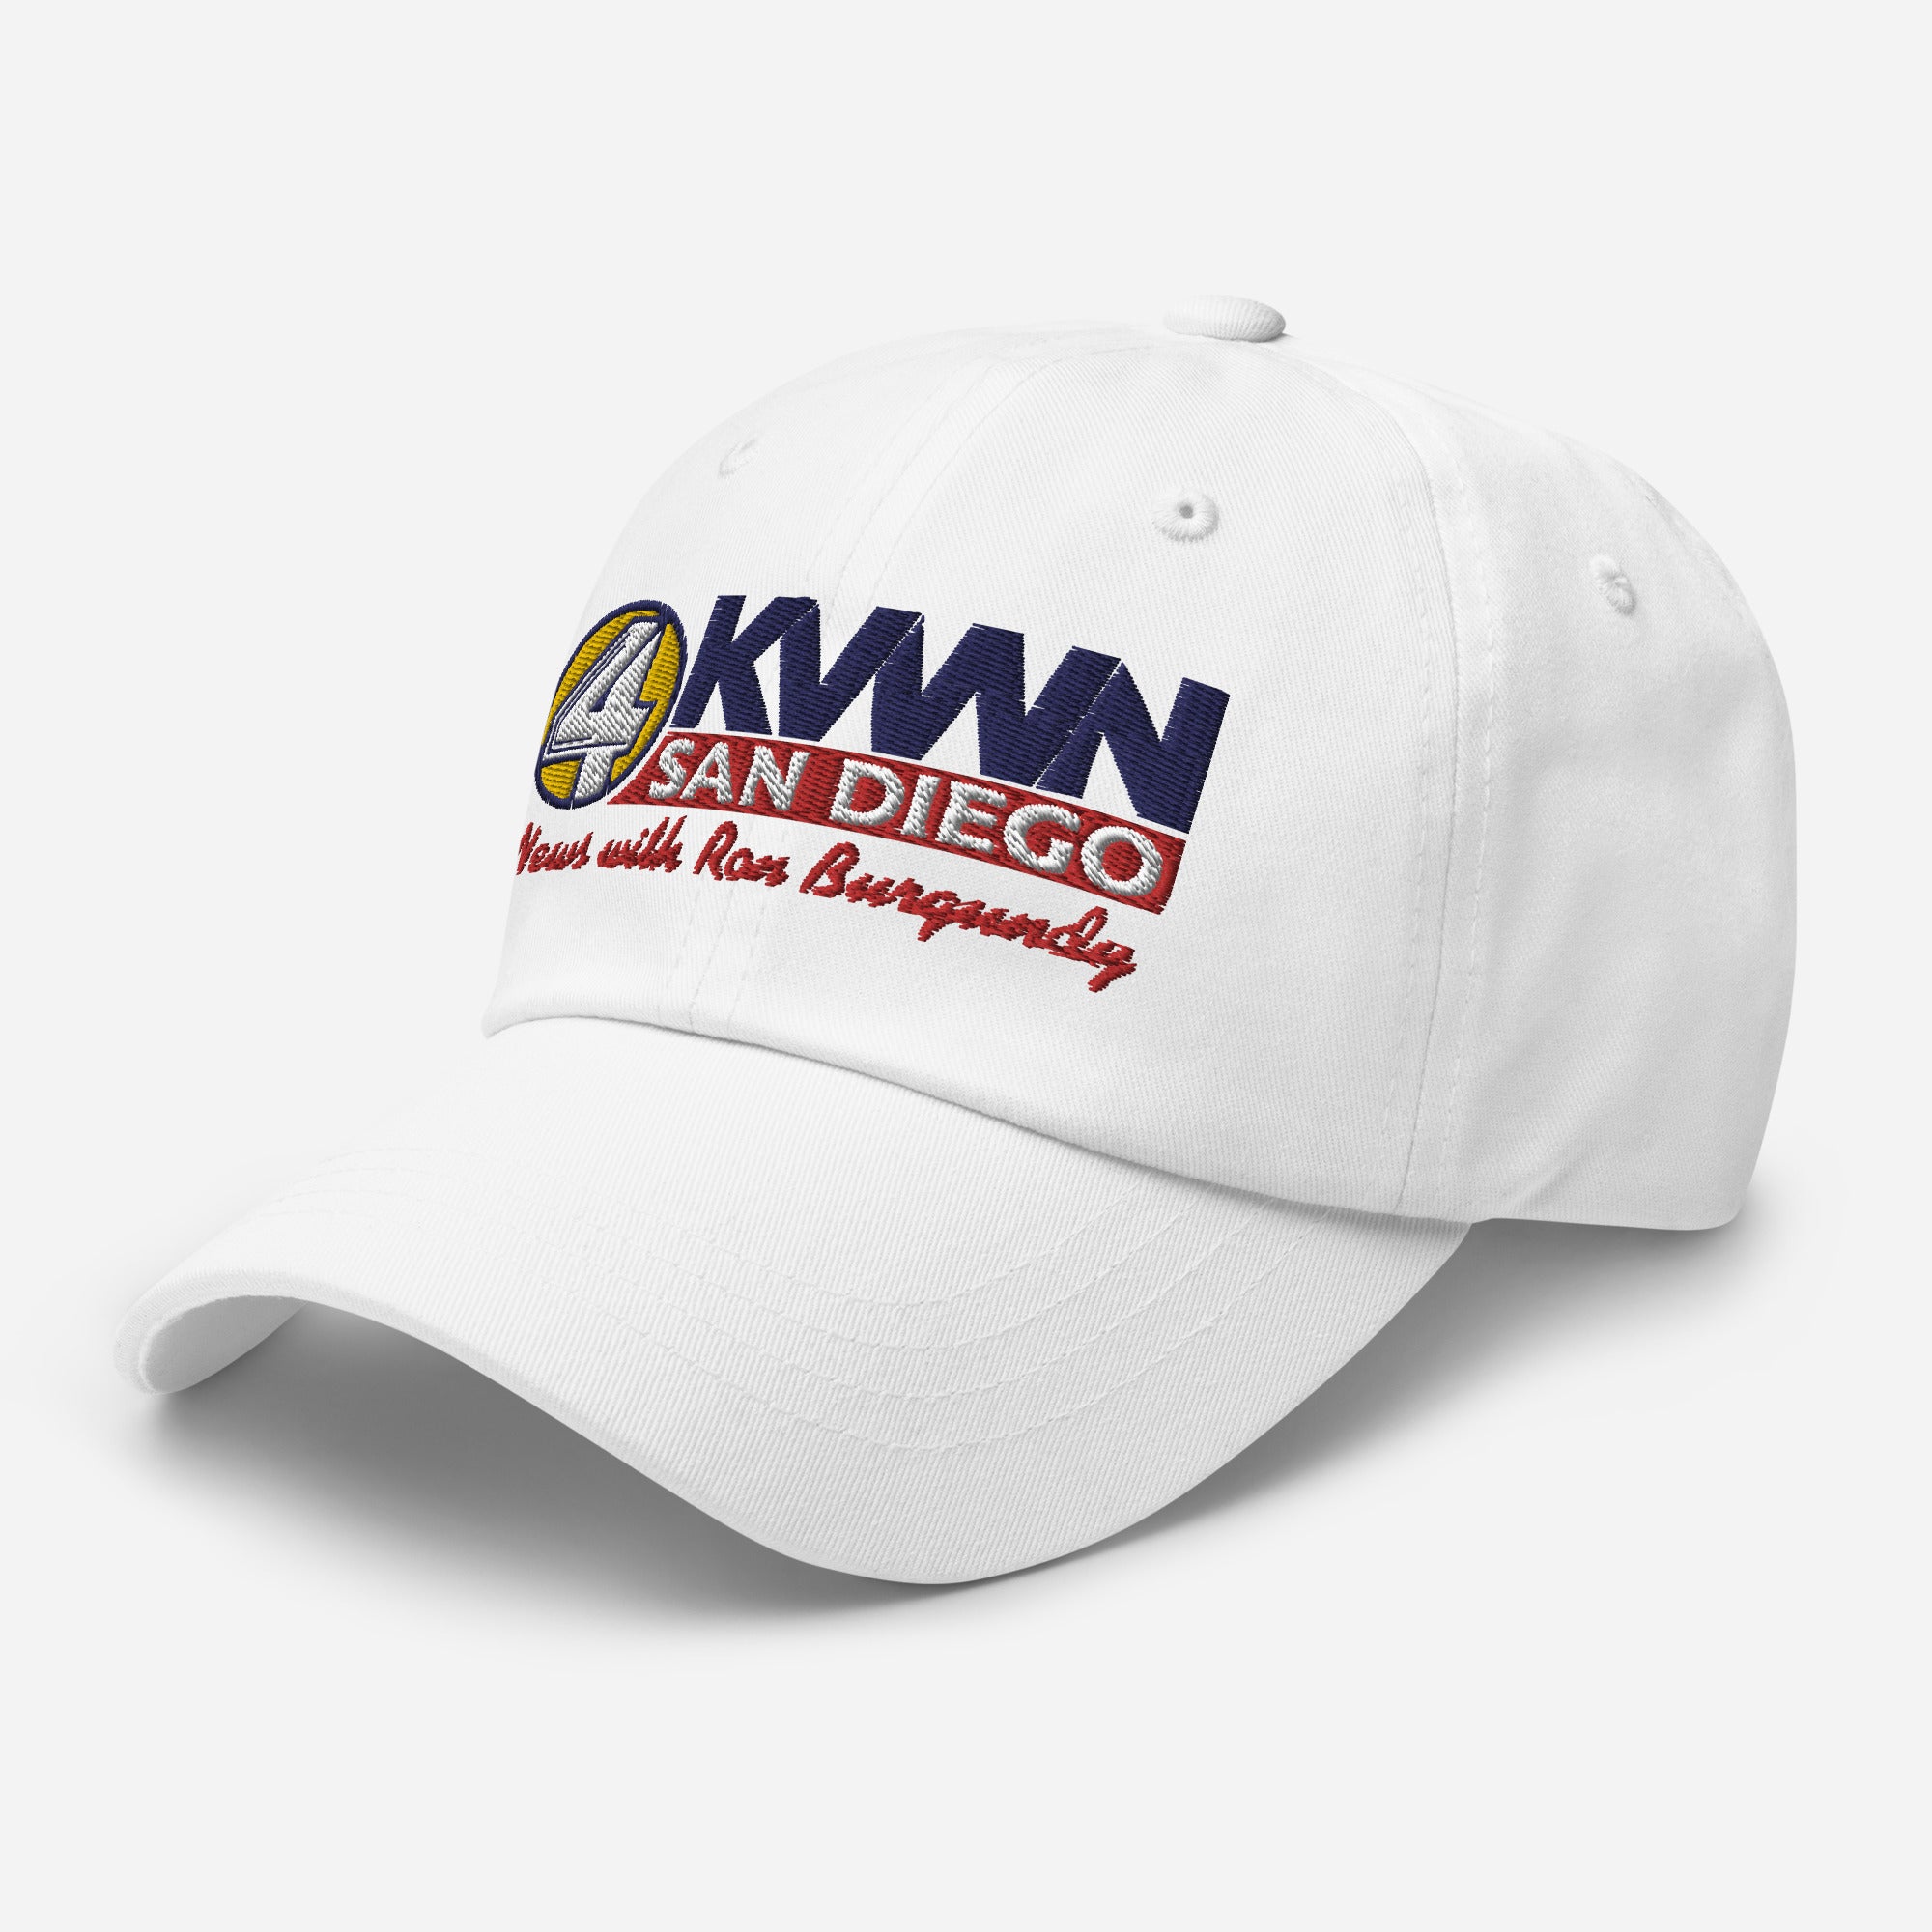 KVWN Channel 4 News Dad Hat